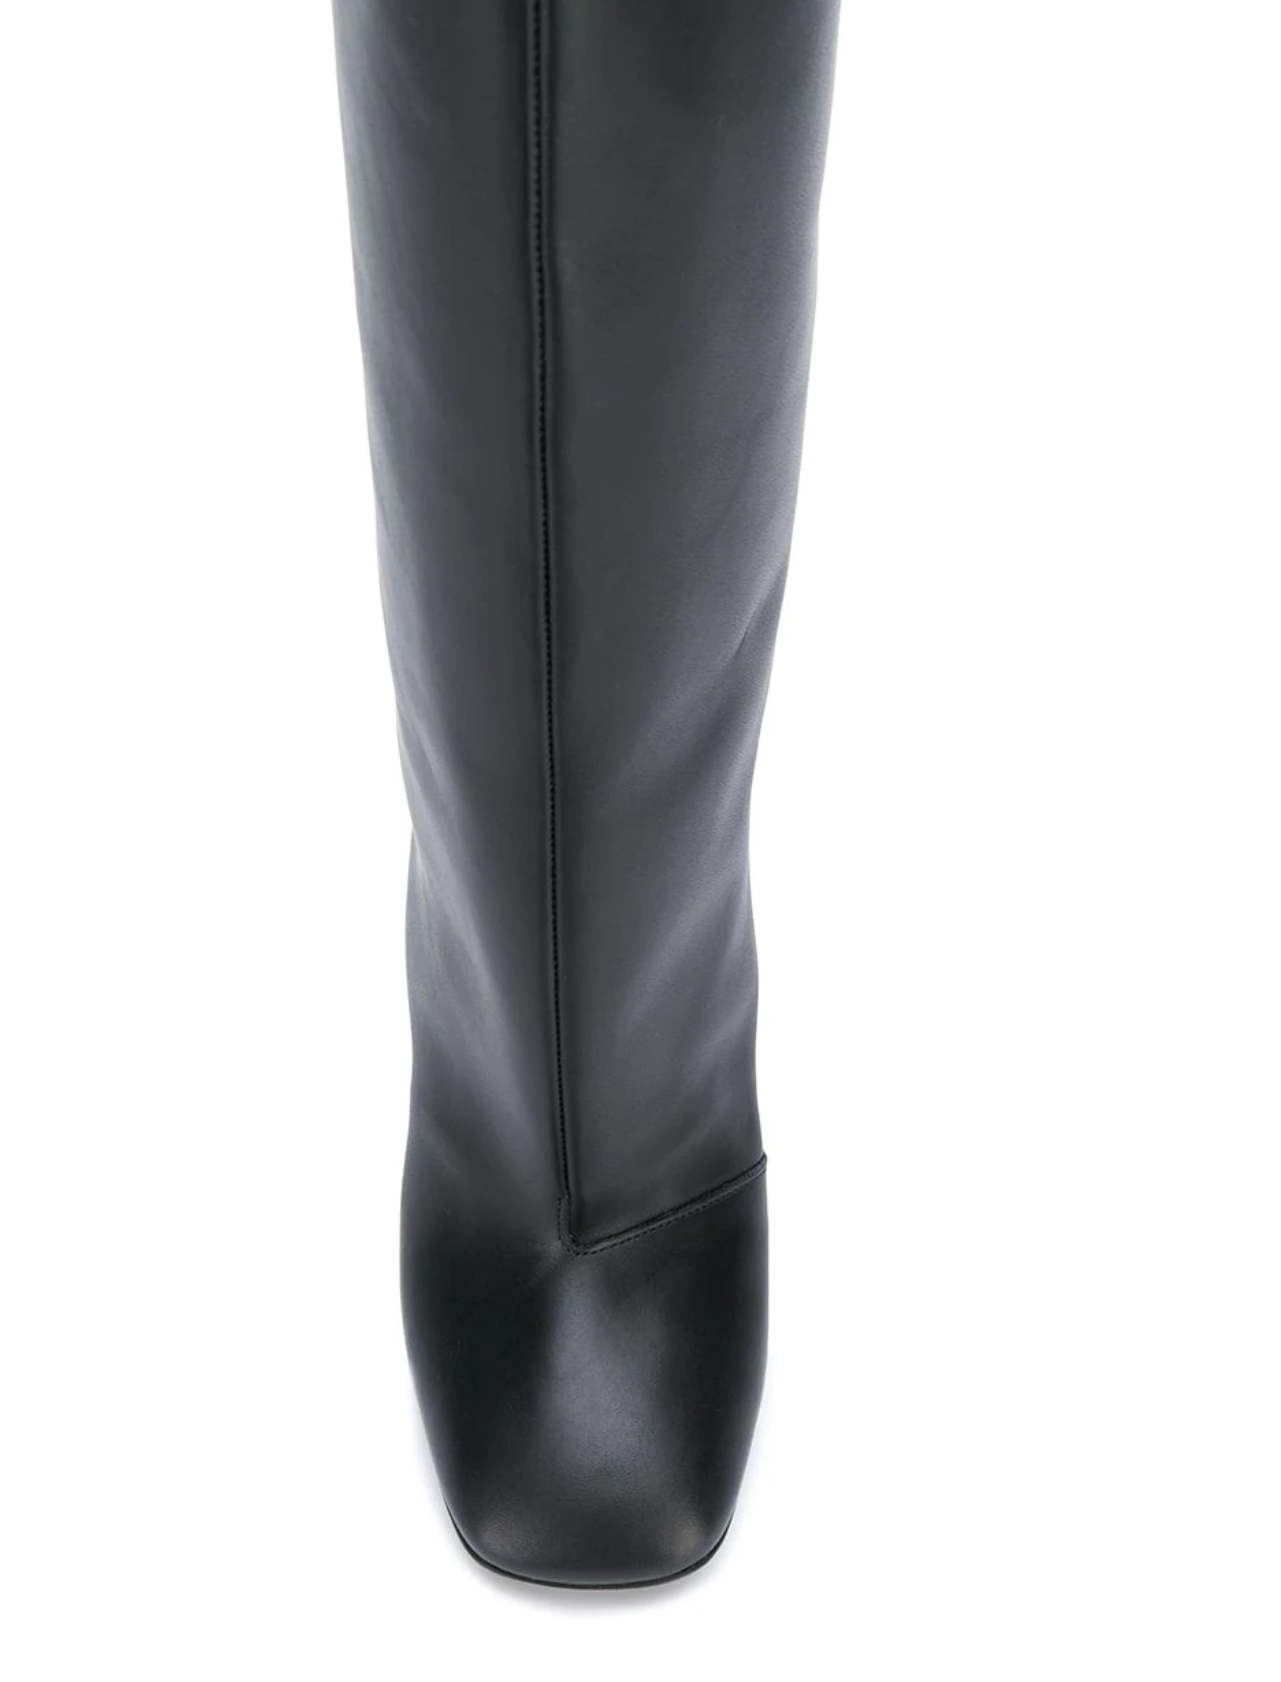 Marni Square Toe Wide Leg Leather Boots Size 36 (US 6)